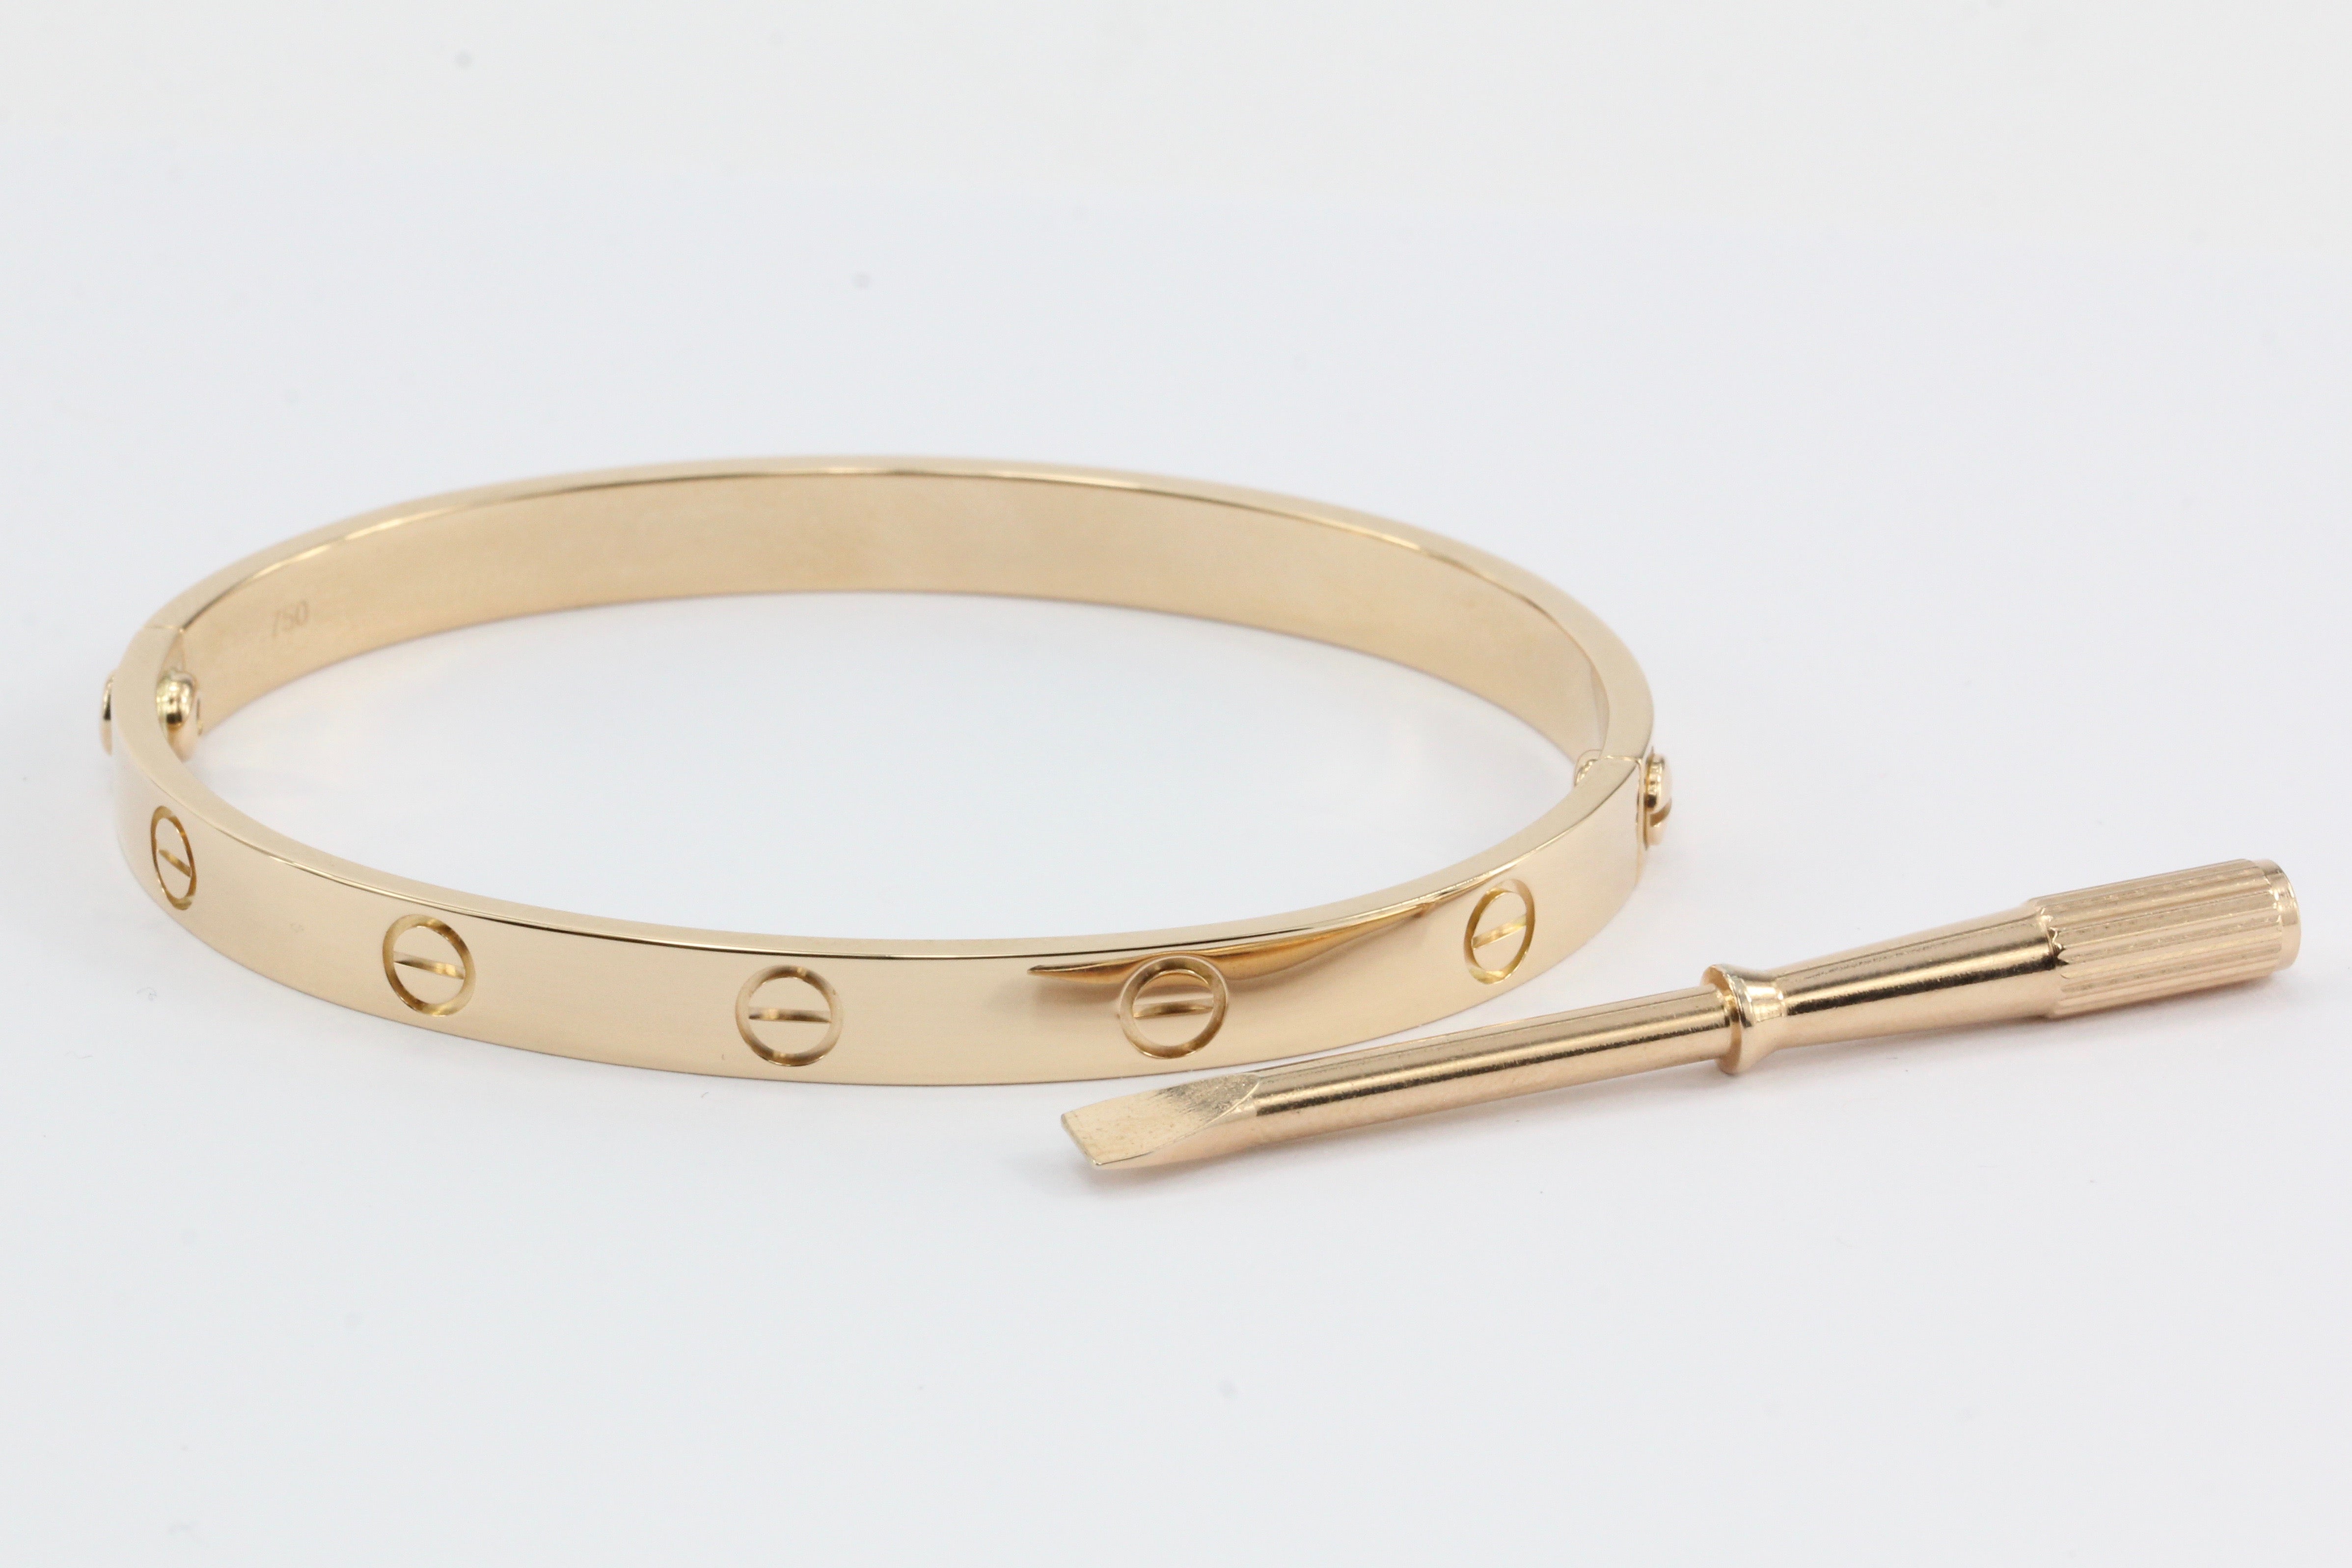 Cartier LOVE Bracelet - 18K Rose Gold Bangle, Bracelets - CRT88880